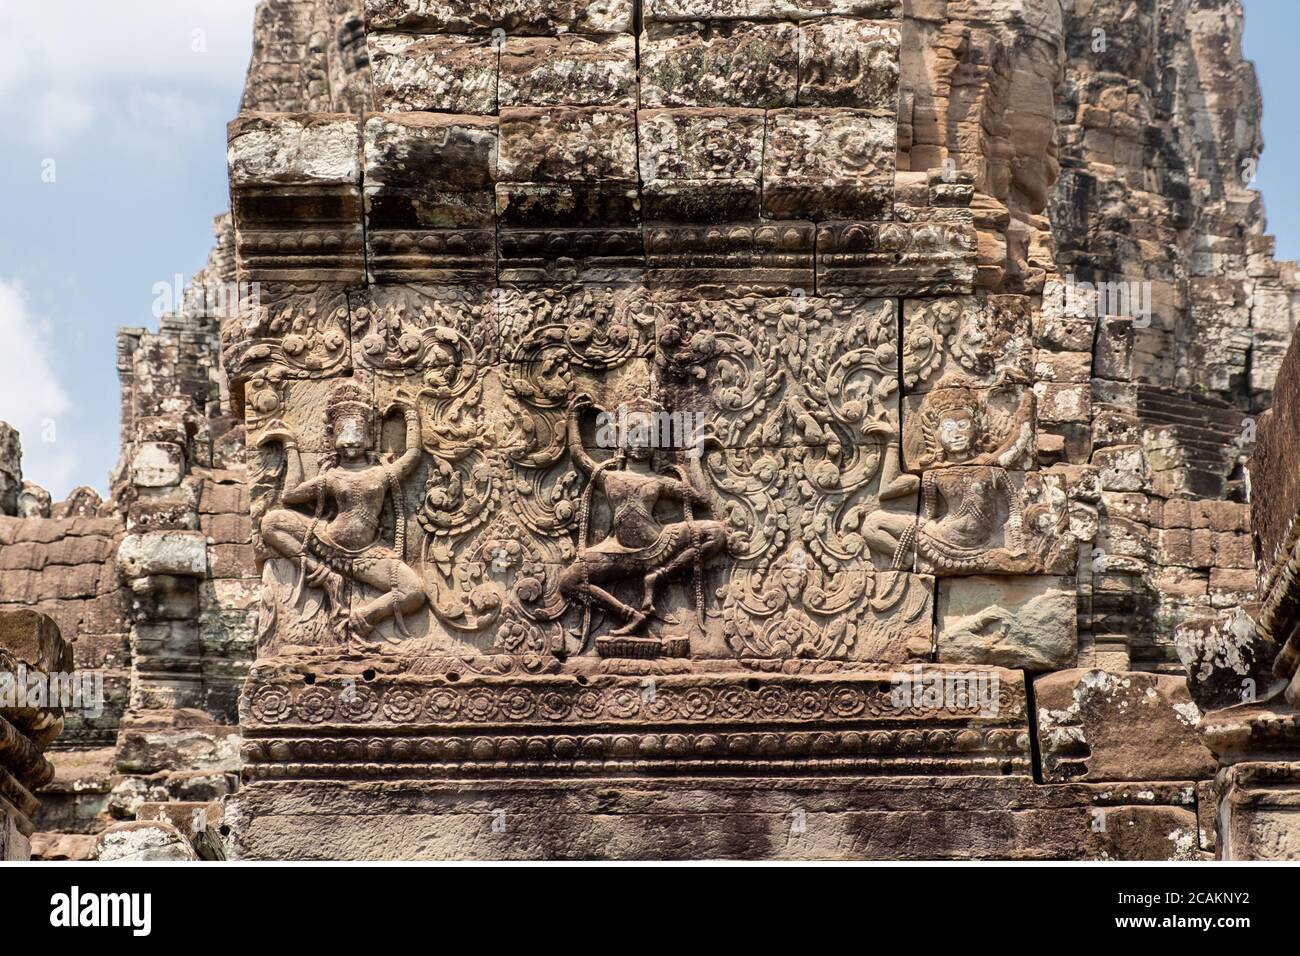 Le temple Bayon, Angkor Thom, Siem Reap, Cambodge Banque D'Images